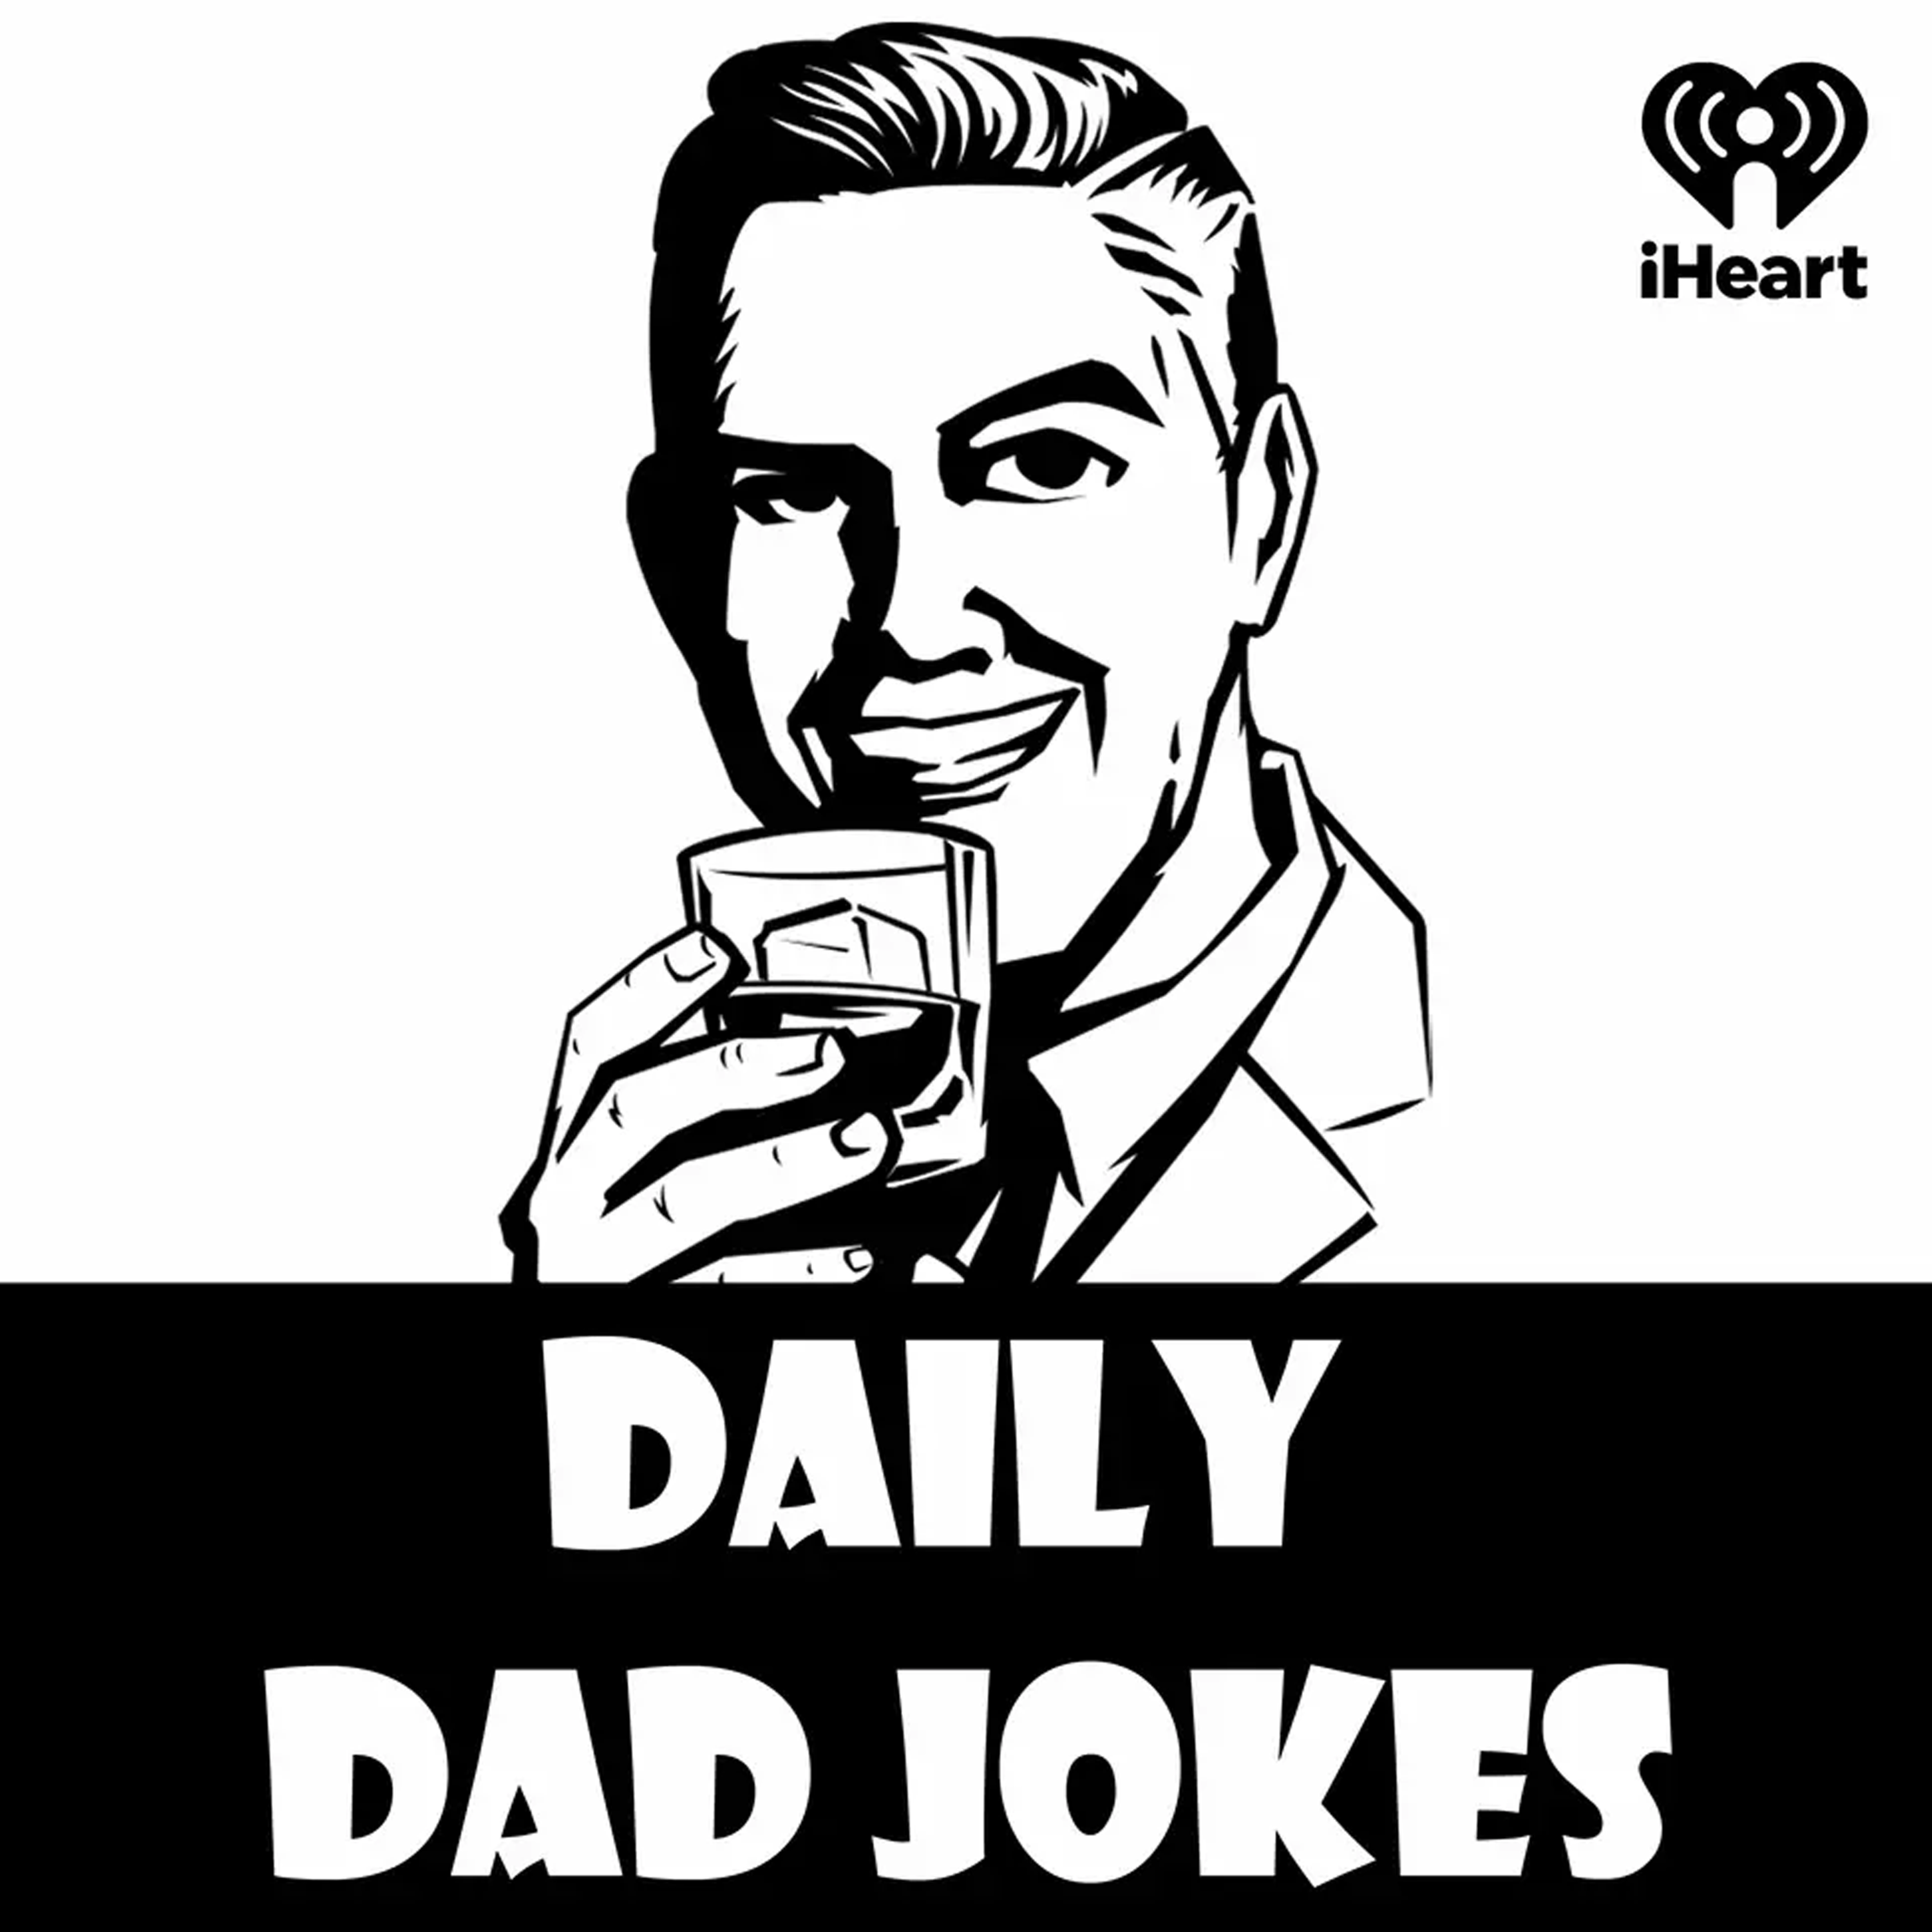 If you like telling dad jokes in the desert | + 25 more jokes | 23 Mar 2023